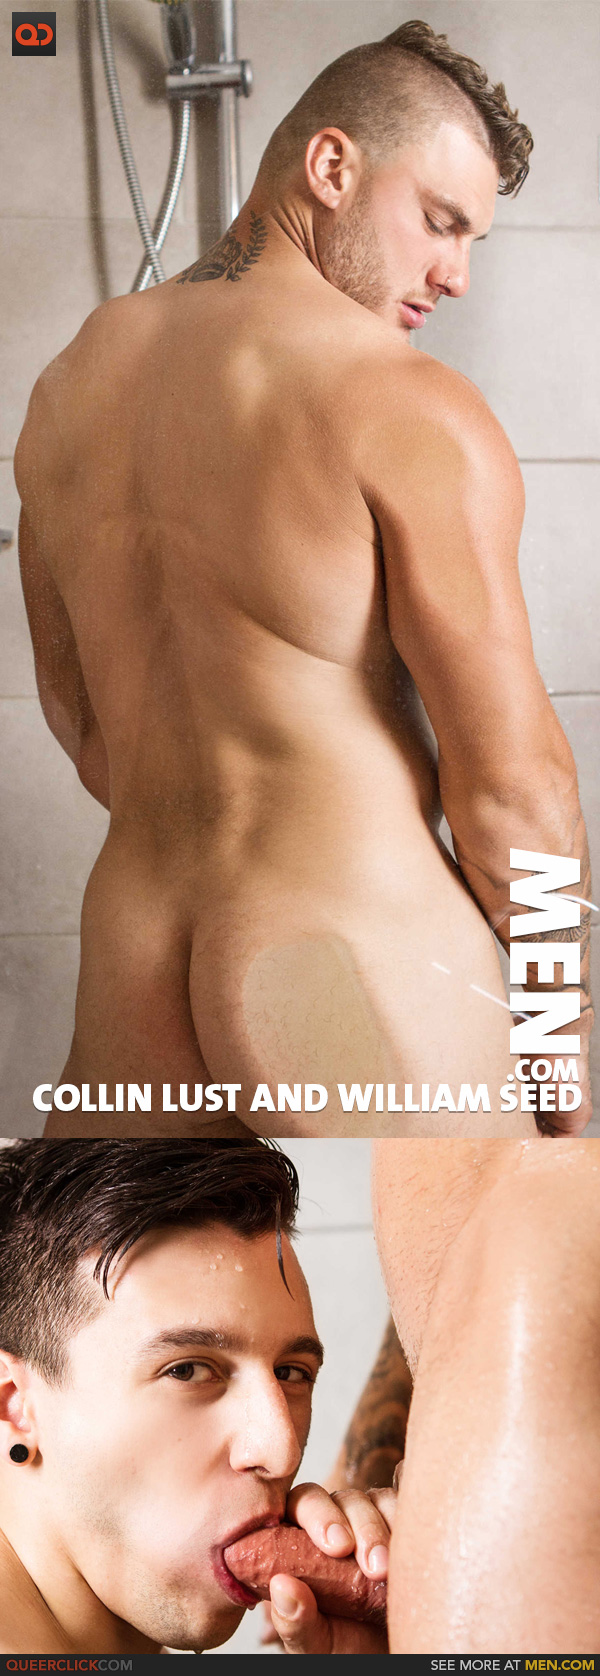 Men.com:  Collin Lust and William Seed